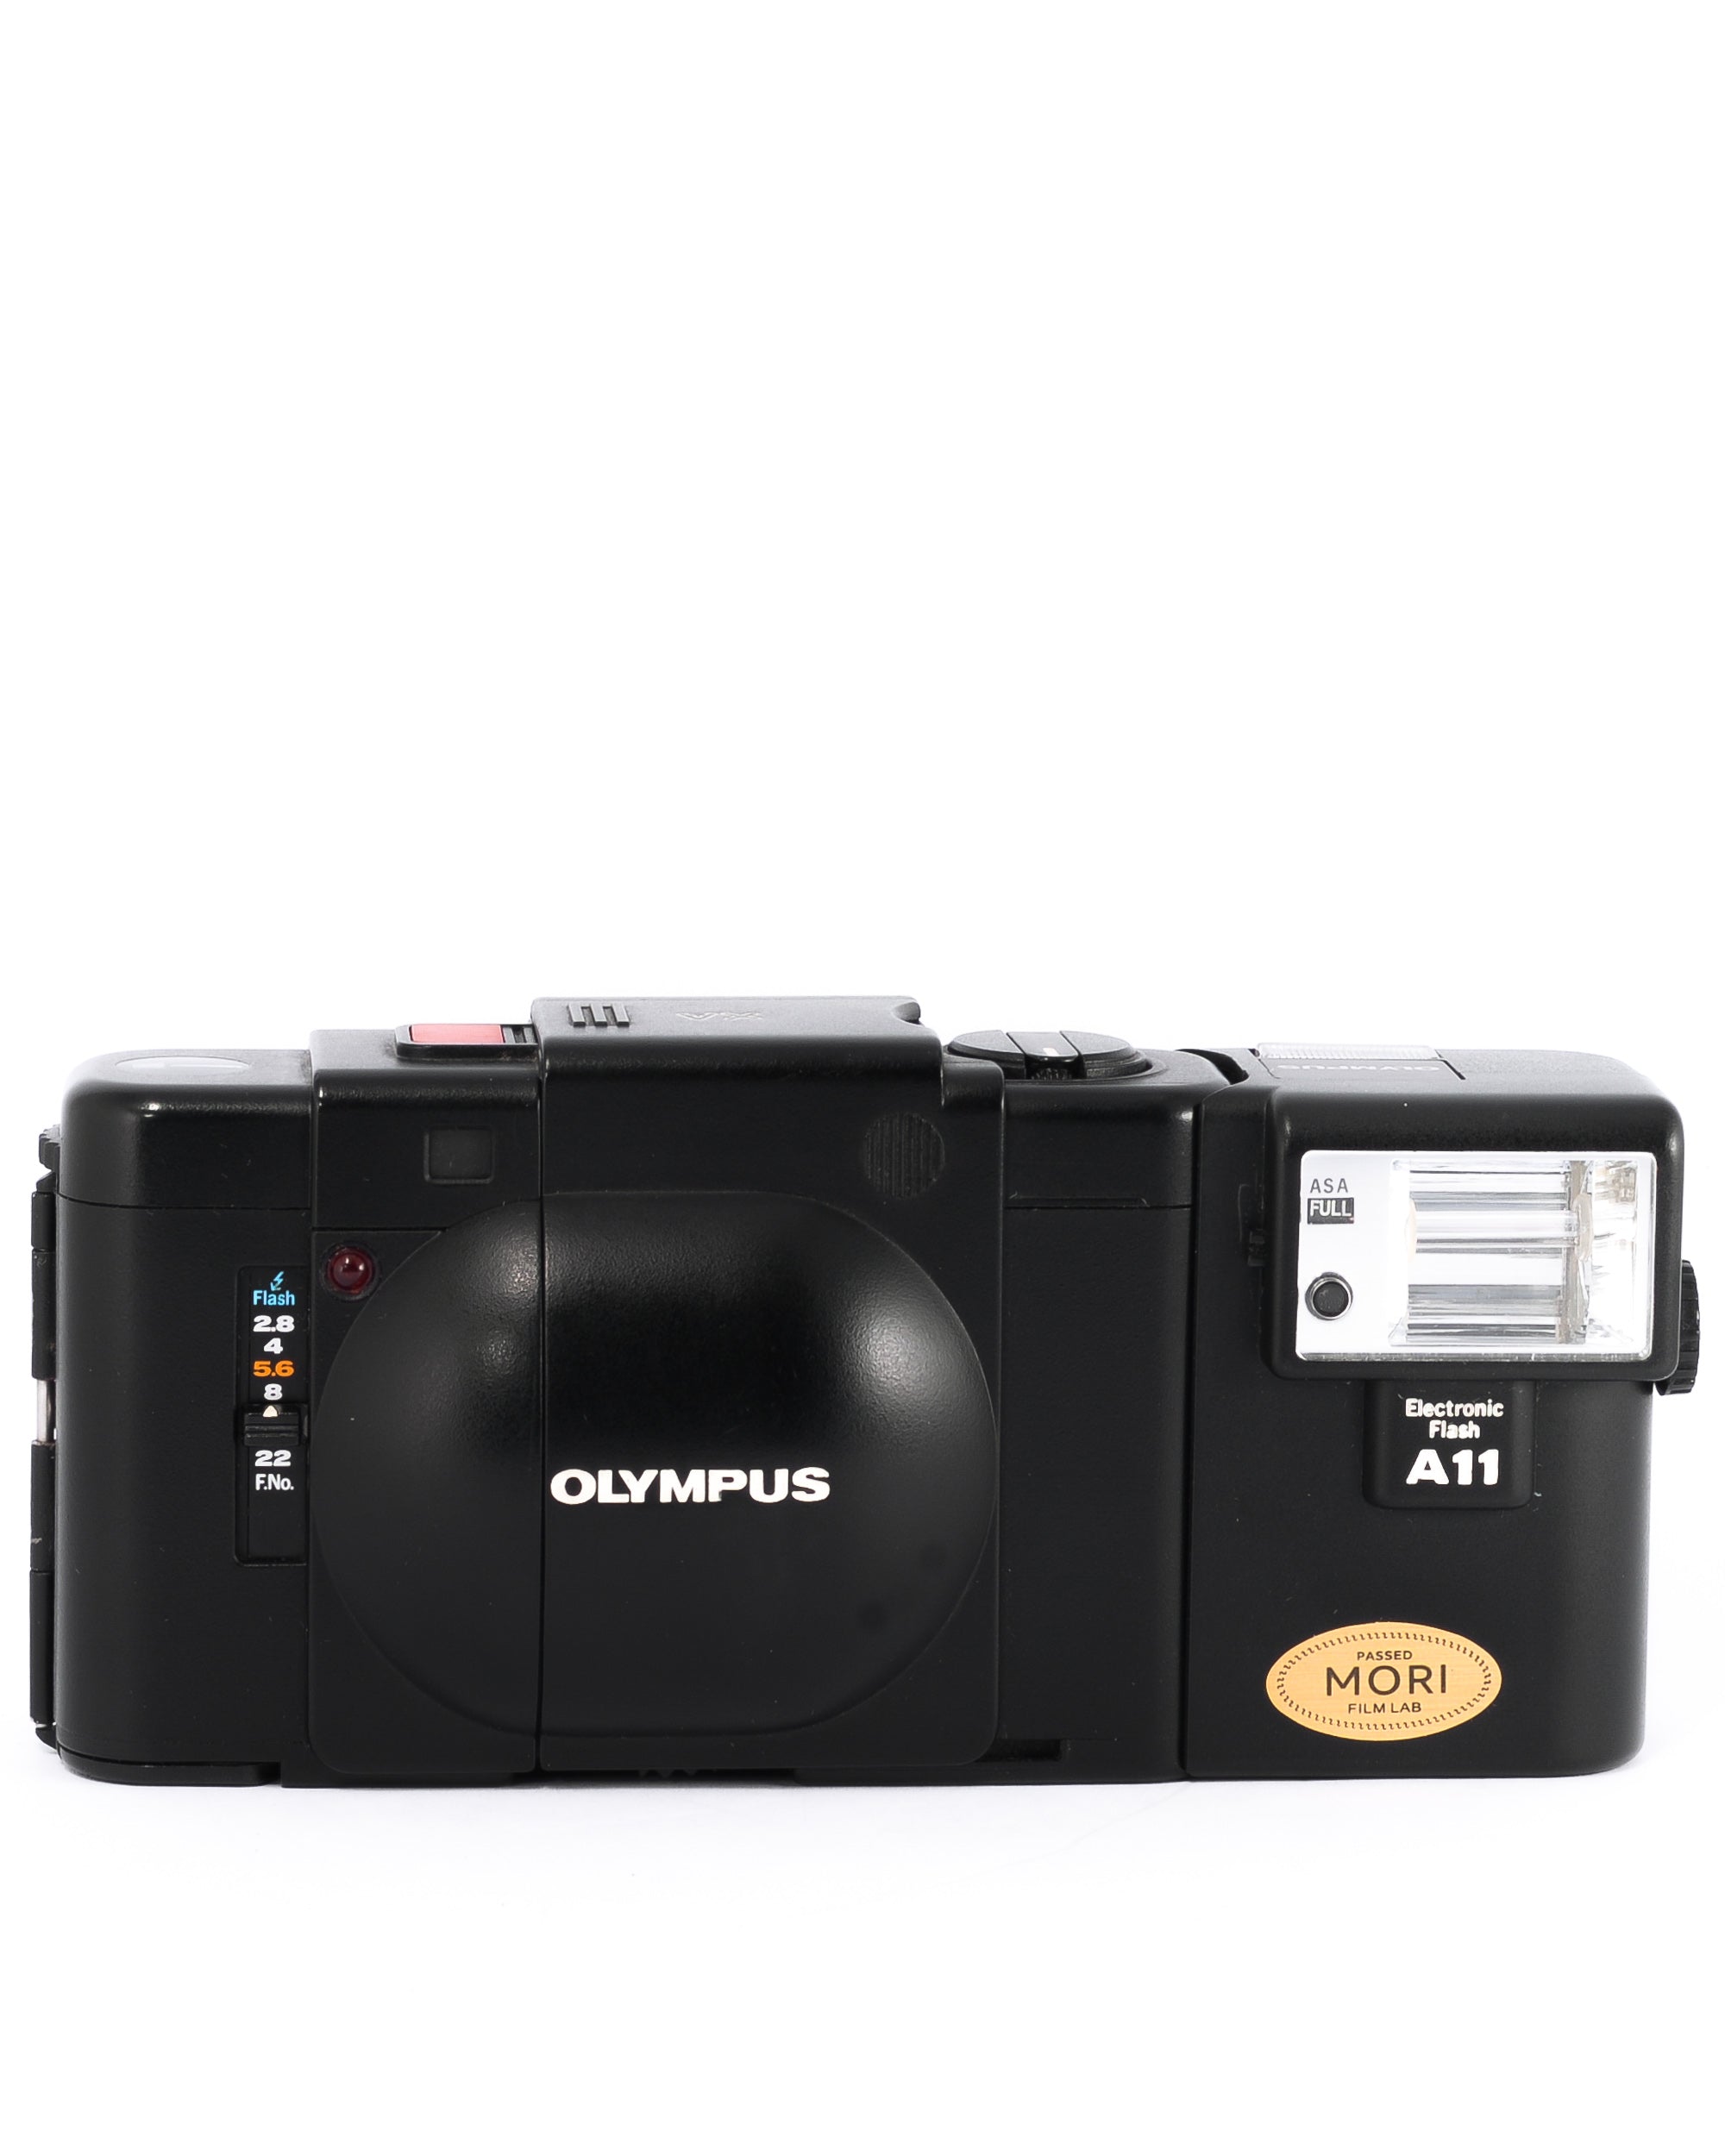 Boxed Olympus XA 35mm rangefinder film camera with 35mm f2.8 lens